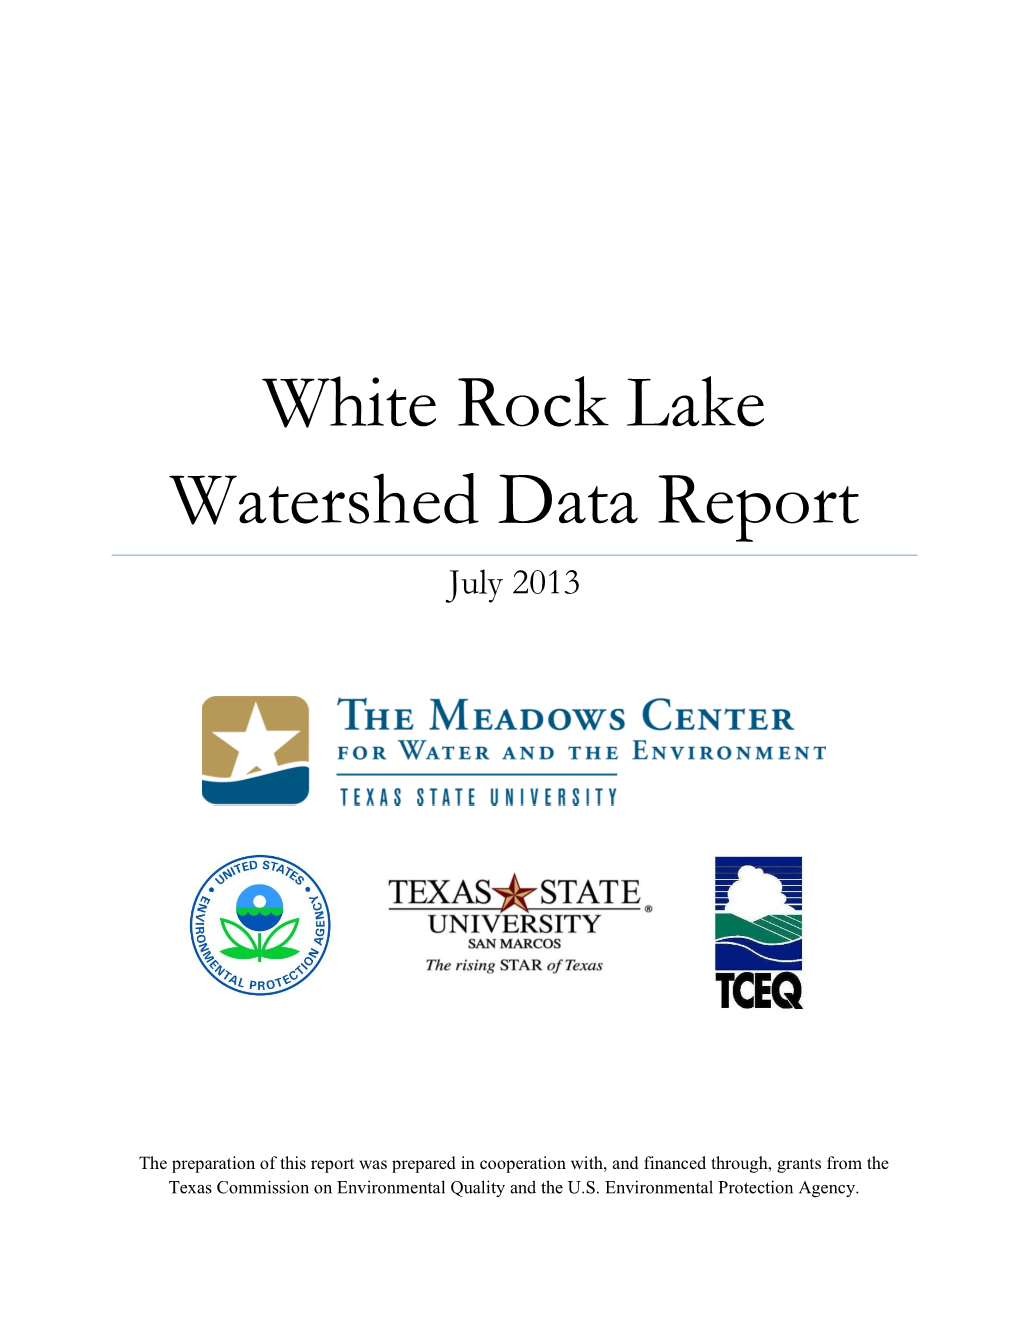 White Rock Lake Watershed Data Report July 2013